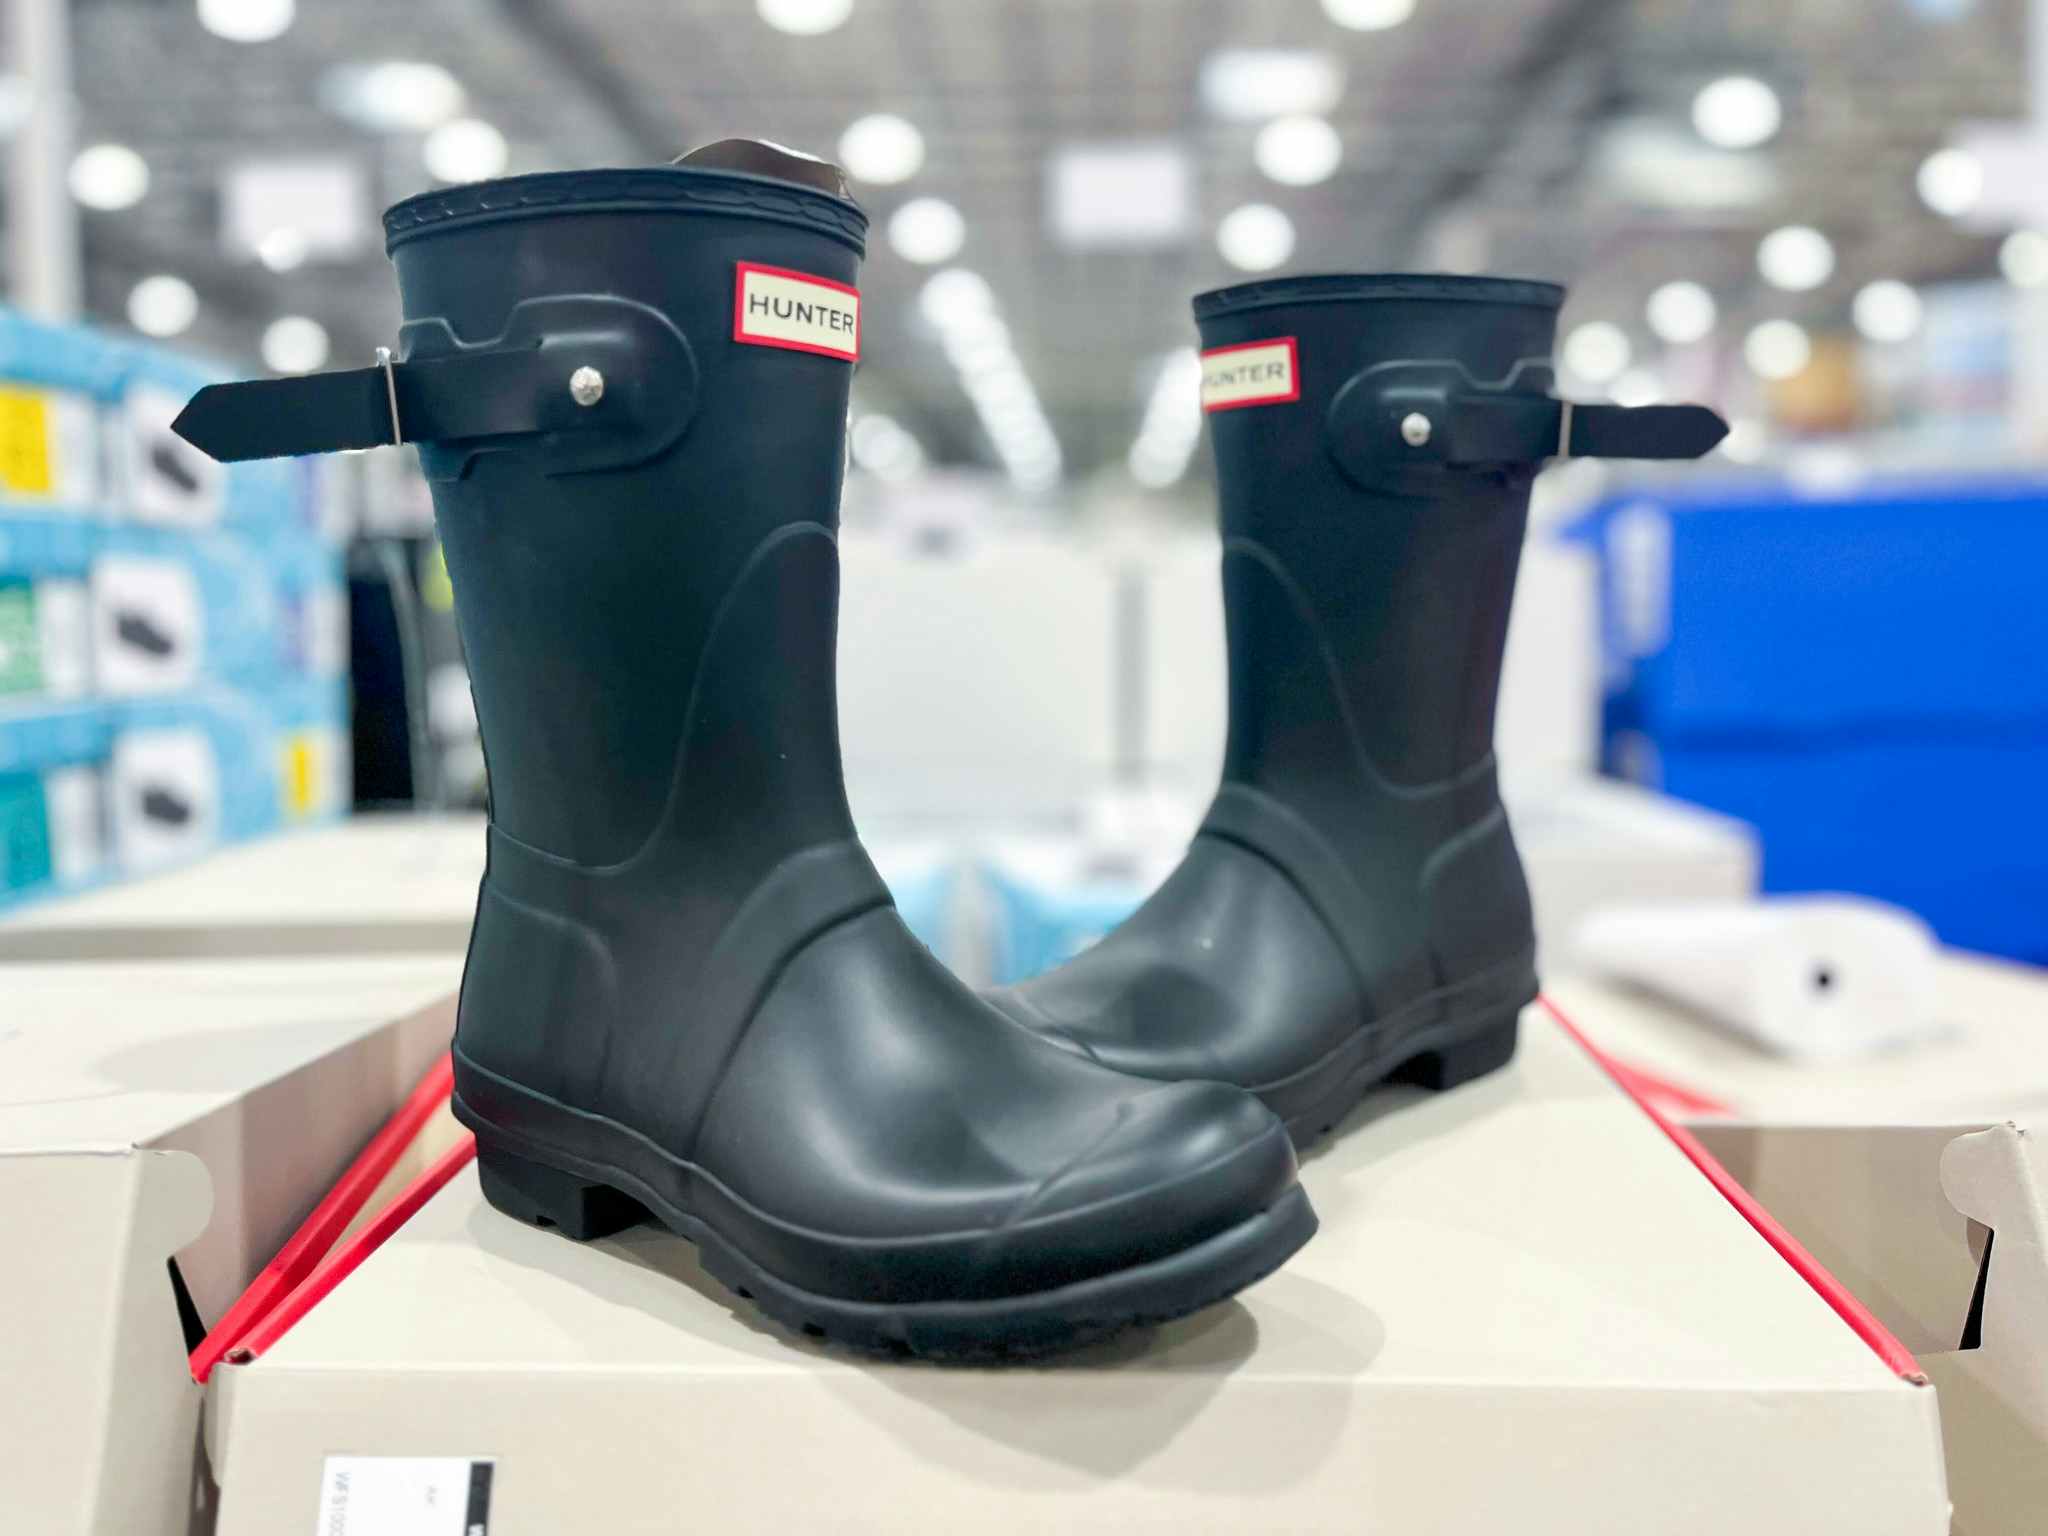 Hunter Rain Boots, as Low as $74.99 Shipped at Zappos (Reg. $160)